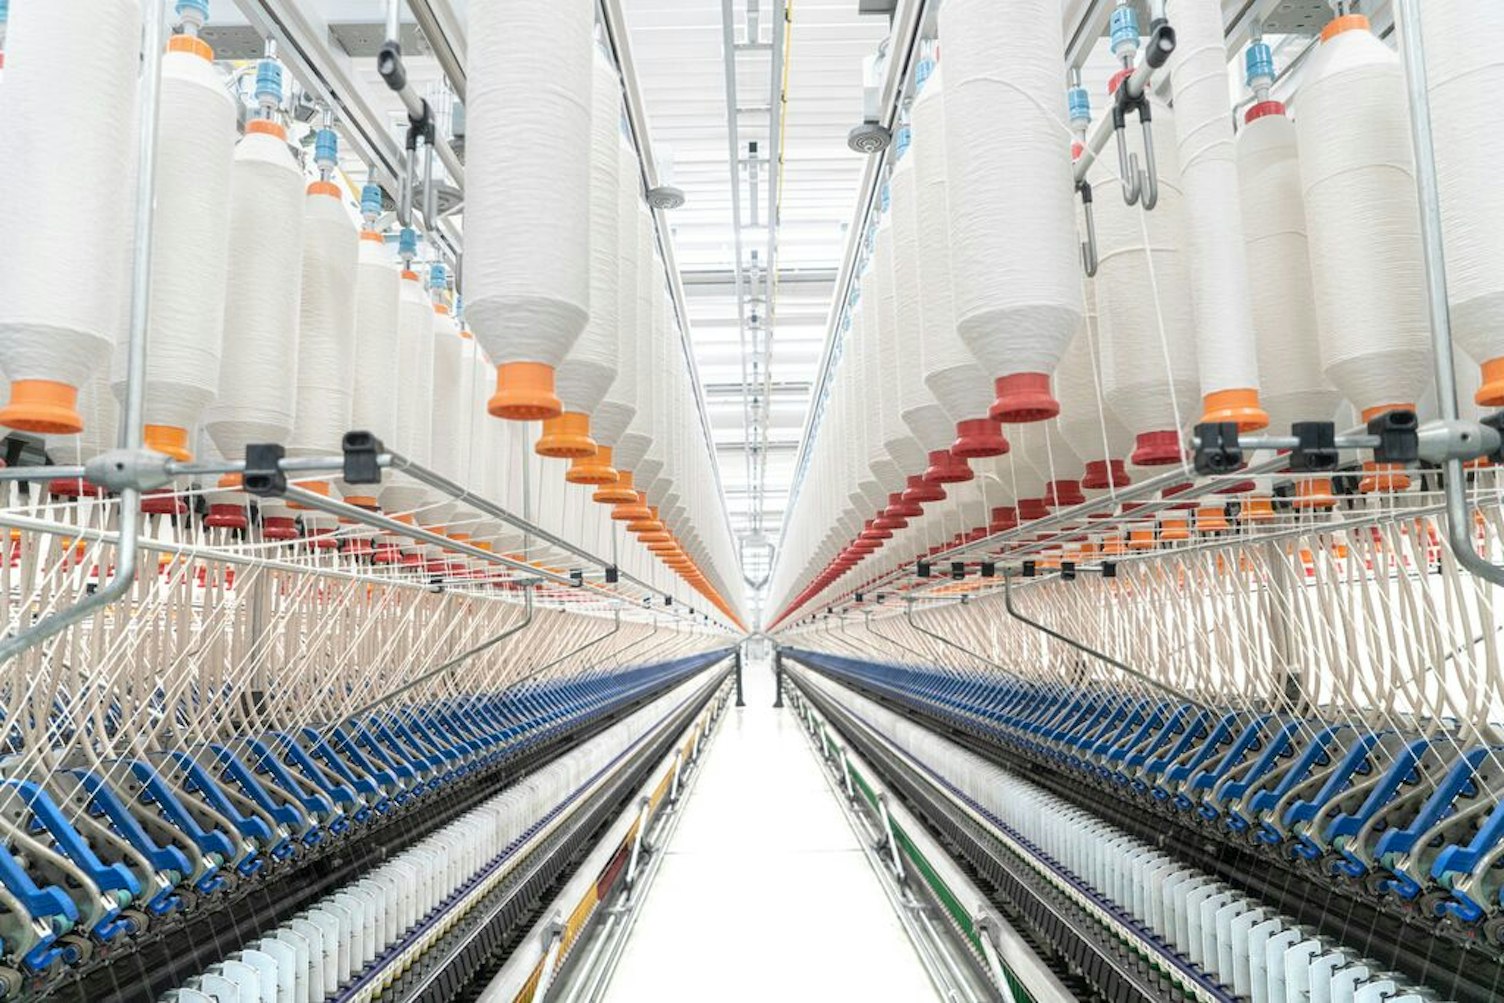 Yarn Fabric at Wool Manufacturing Facility